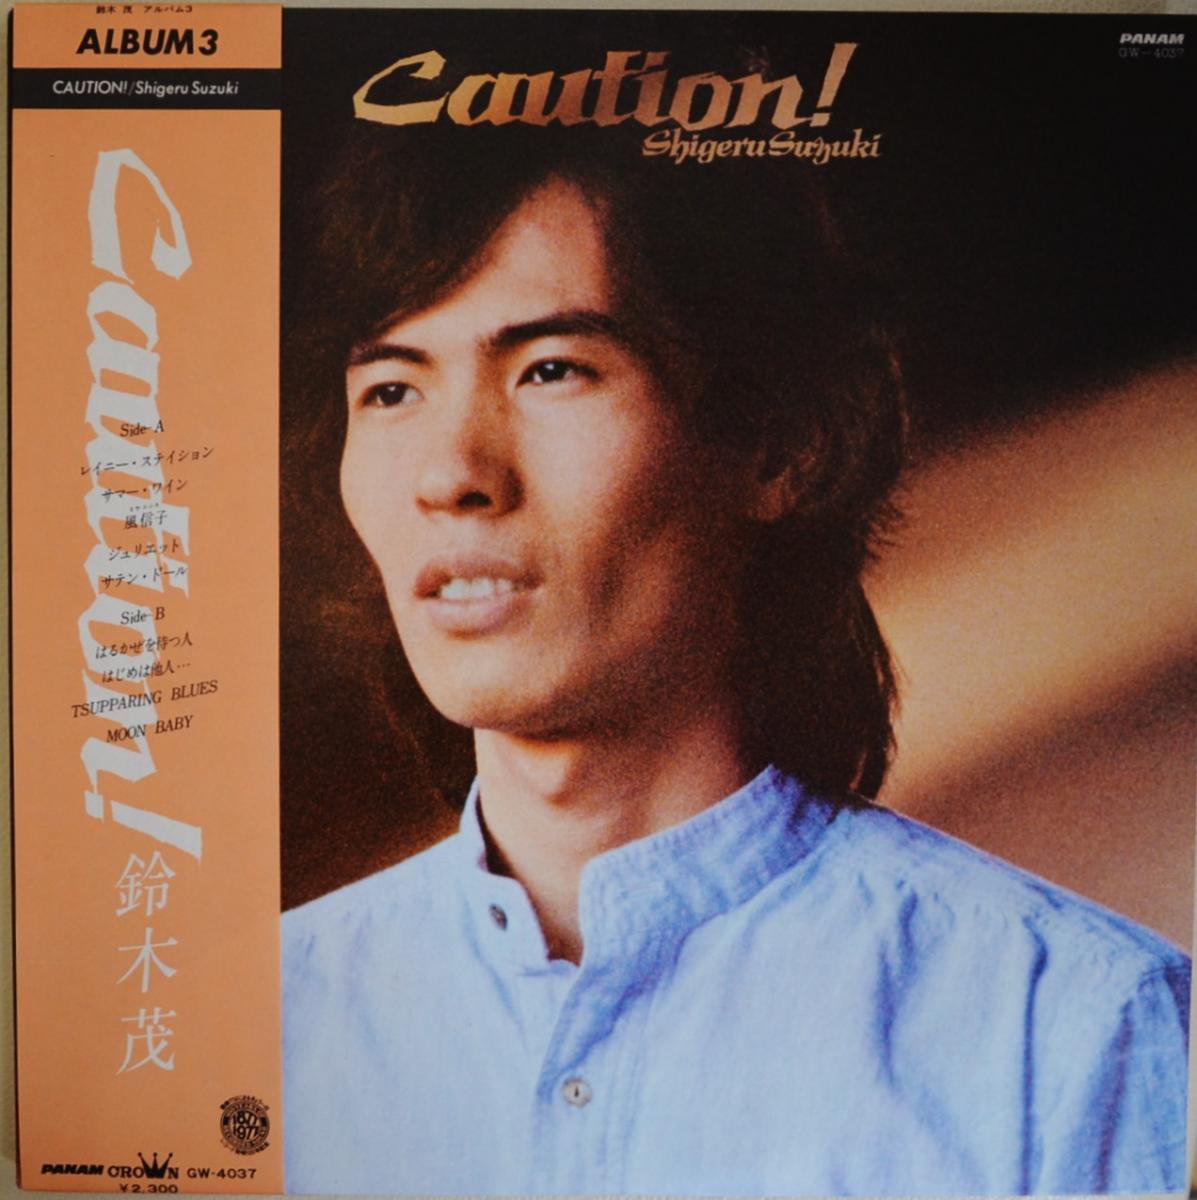  SHIGERU SUZUKI / CAUTION! - ALBUM 3 (LP)